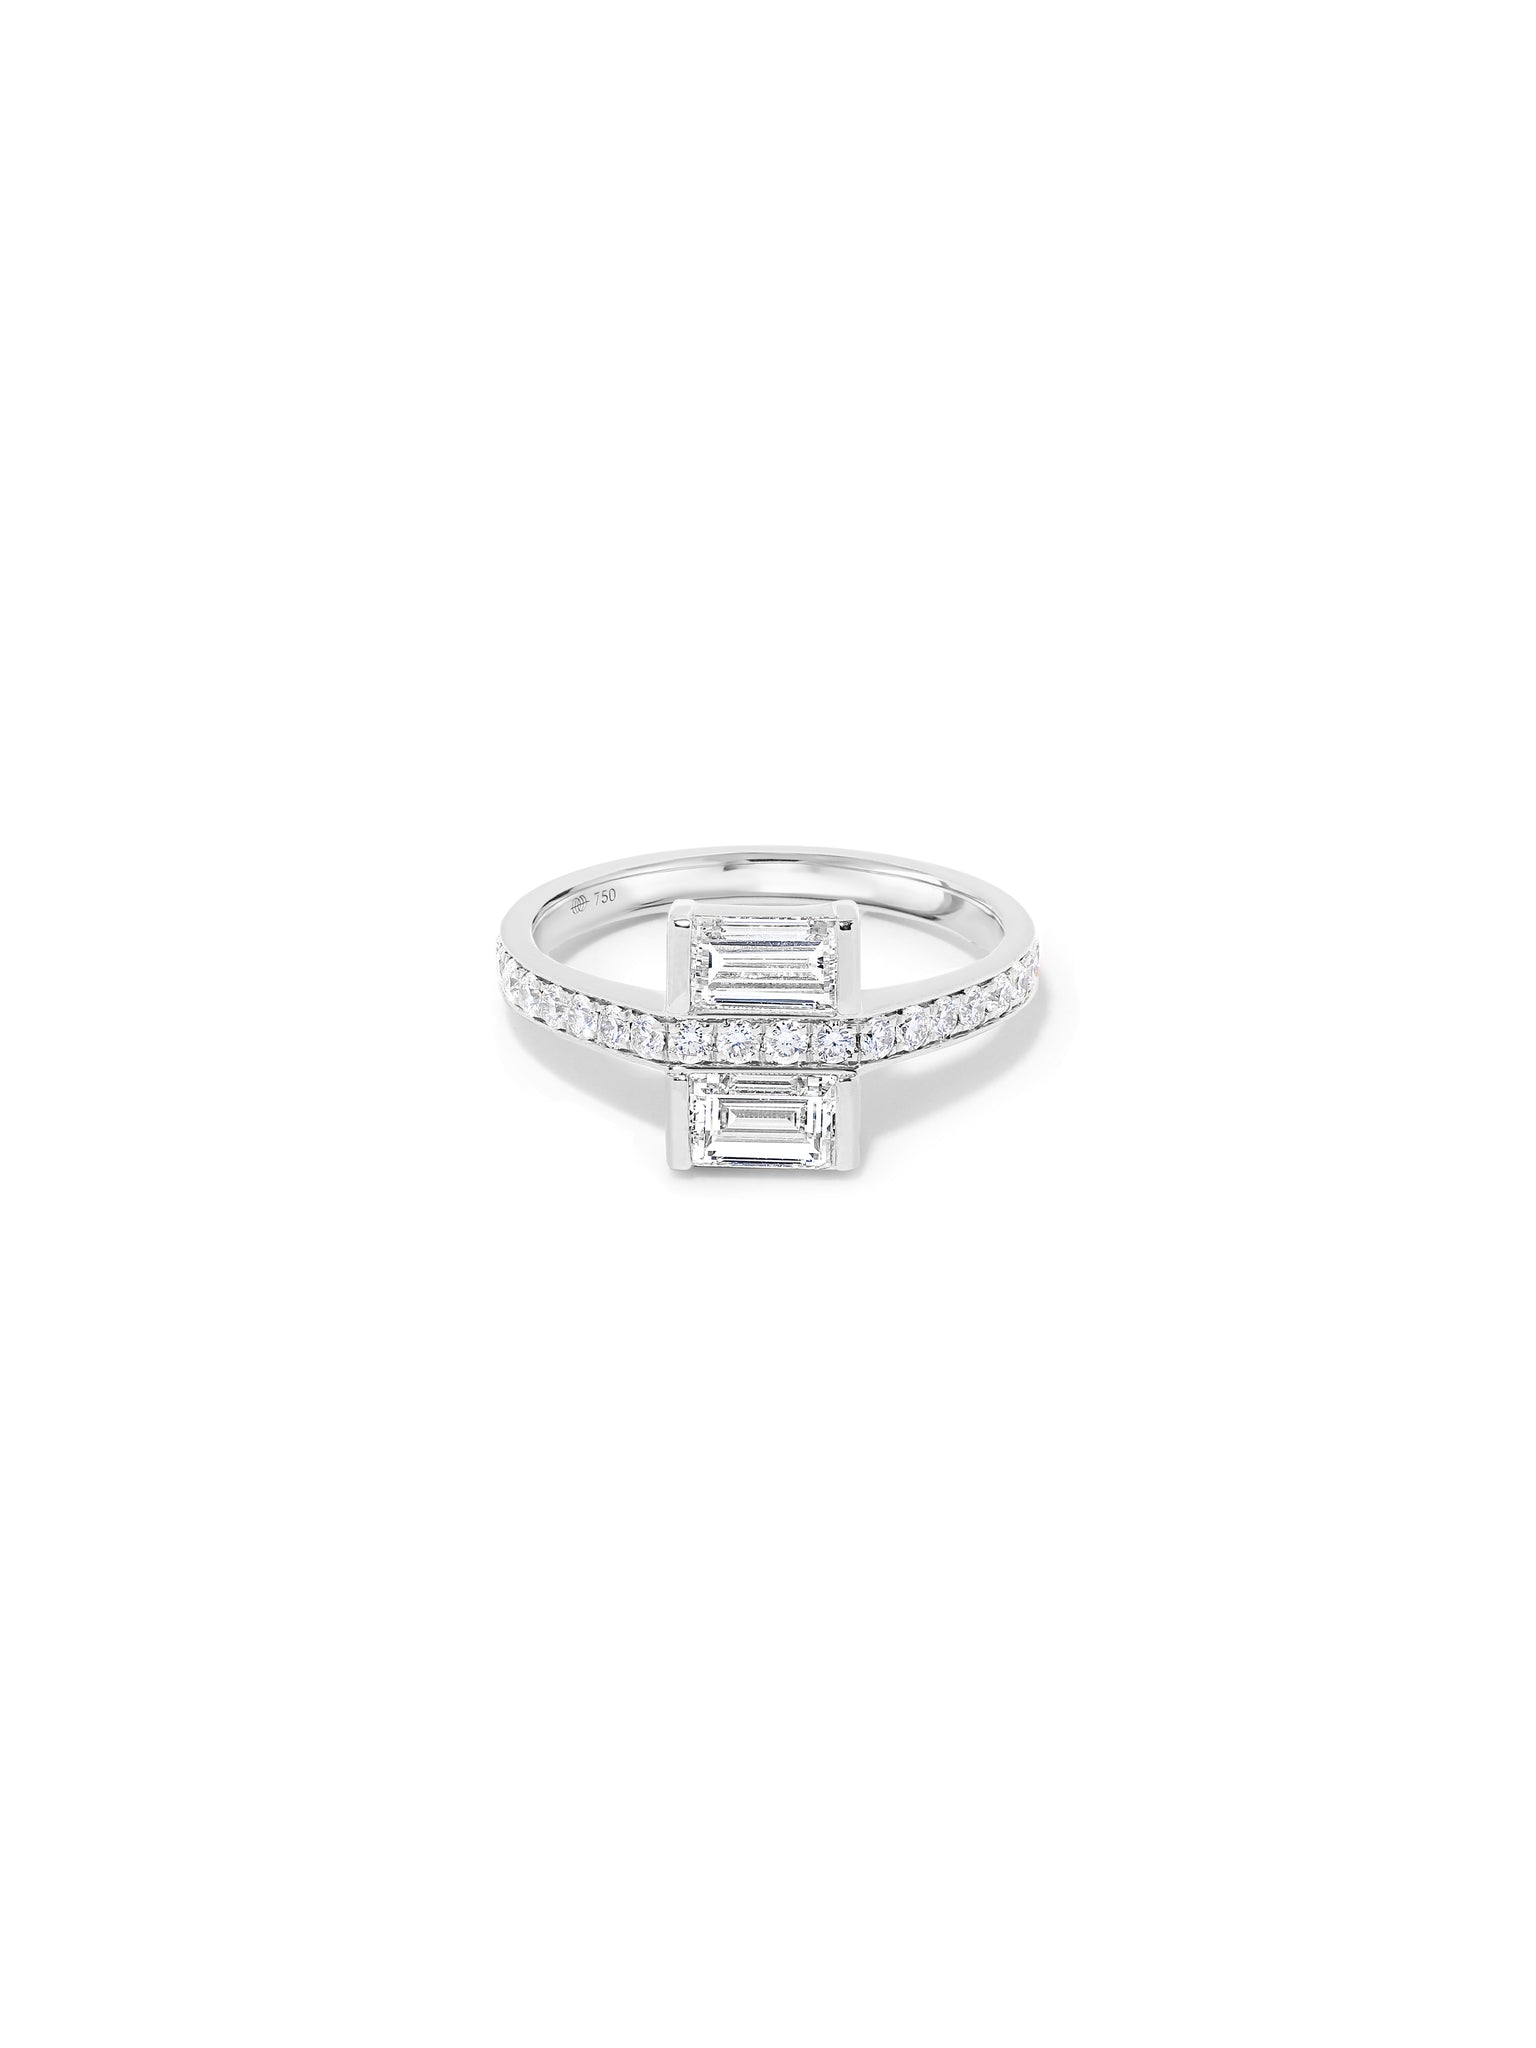 Equinox Baguette Diamond Ring